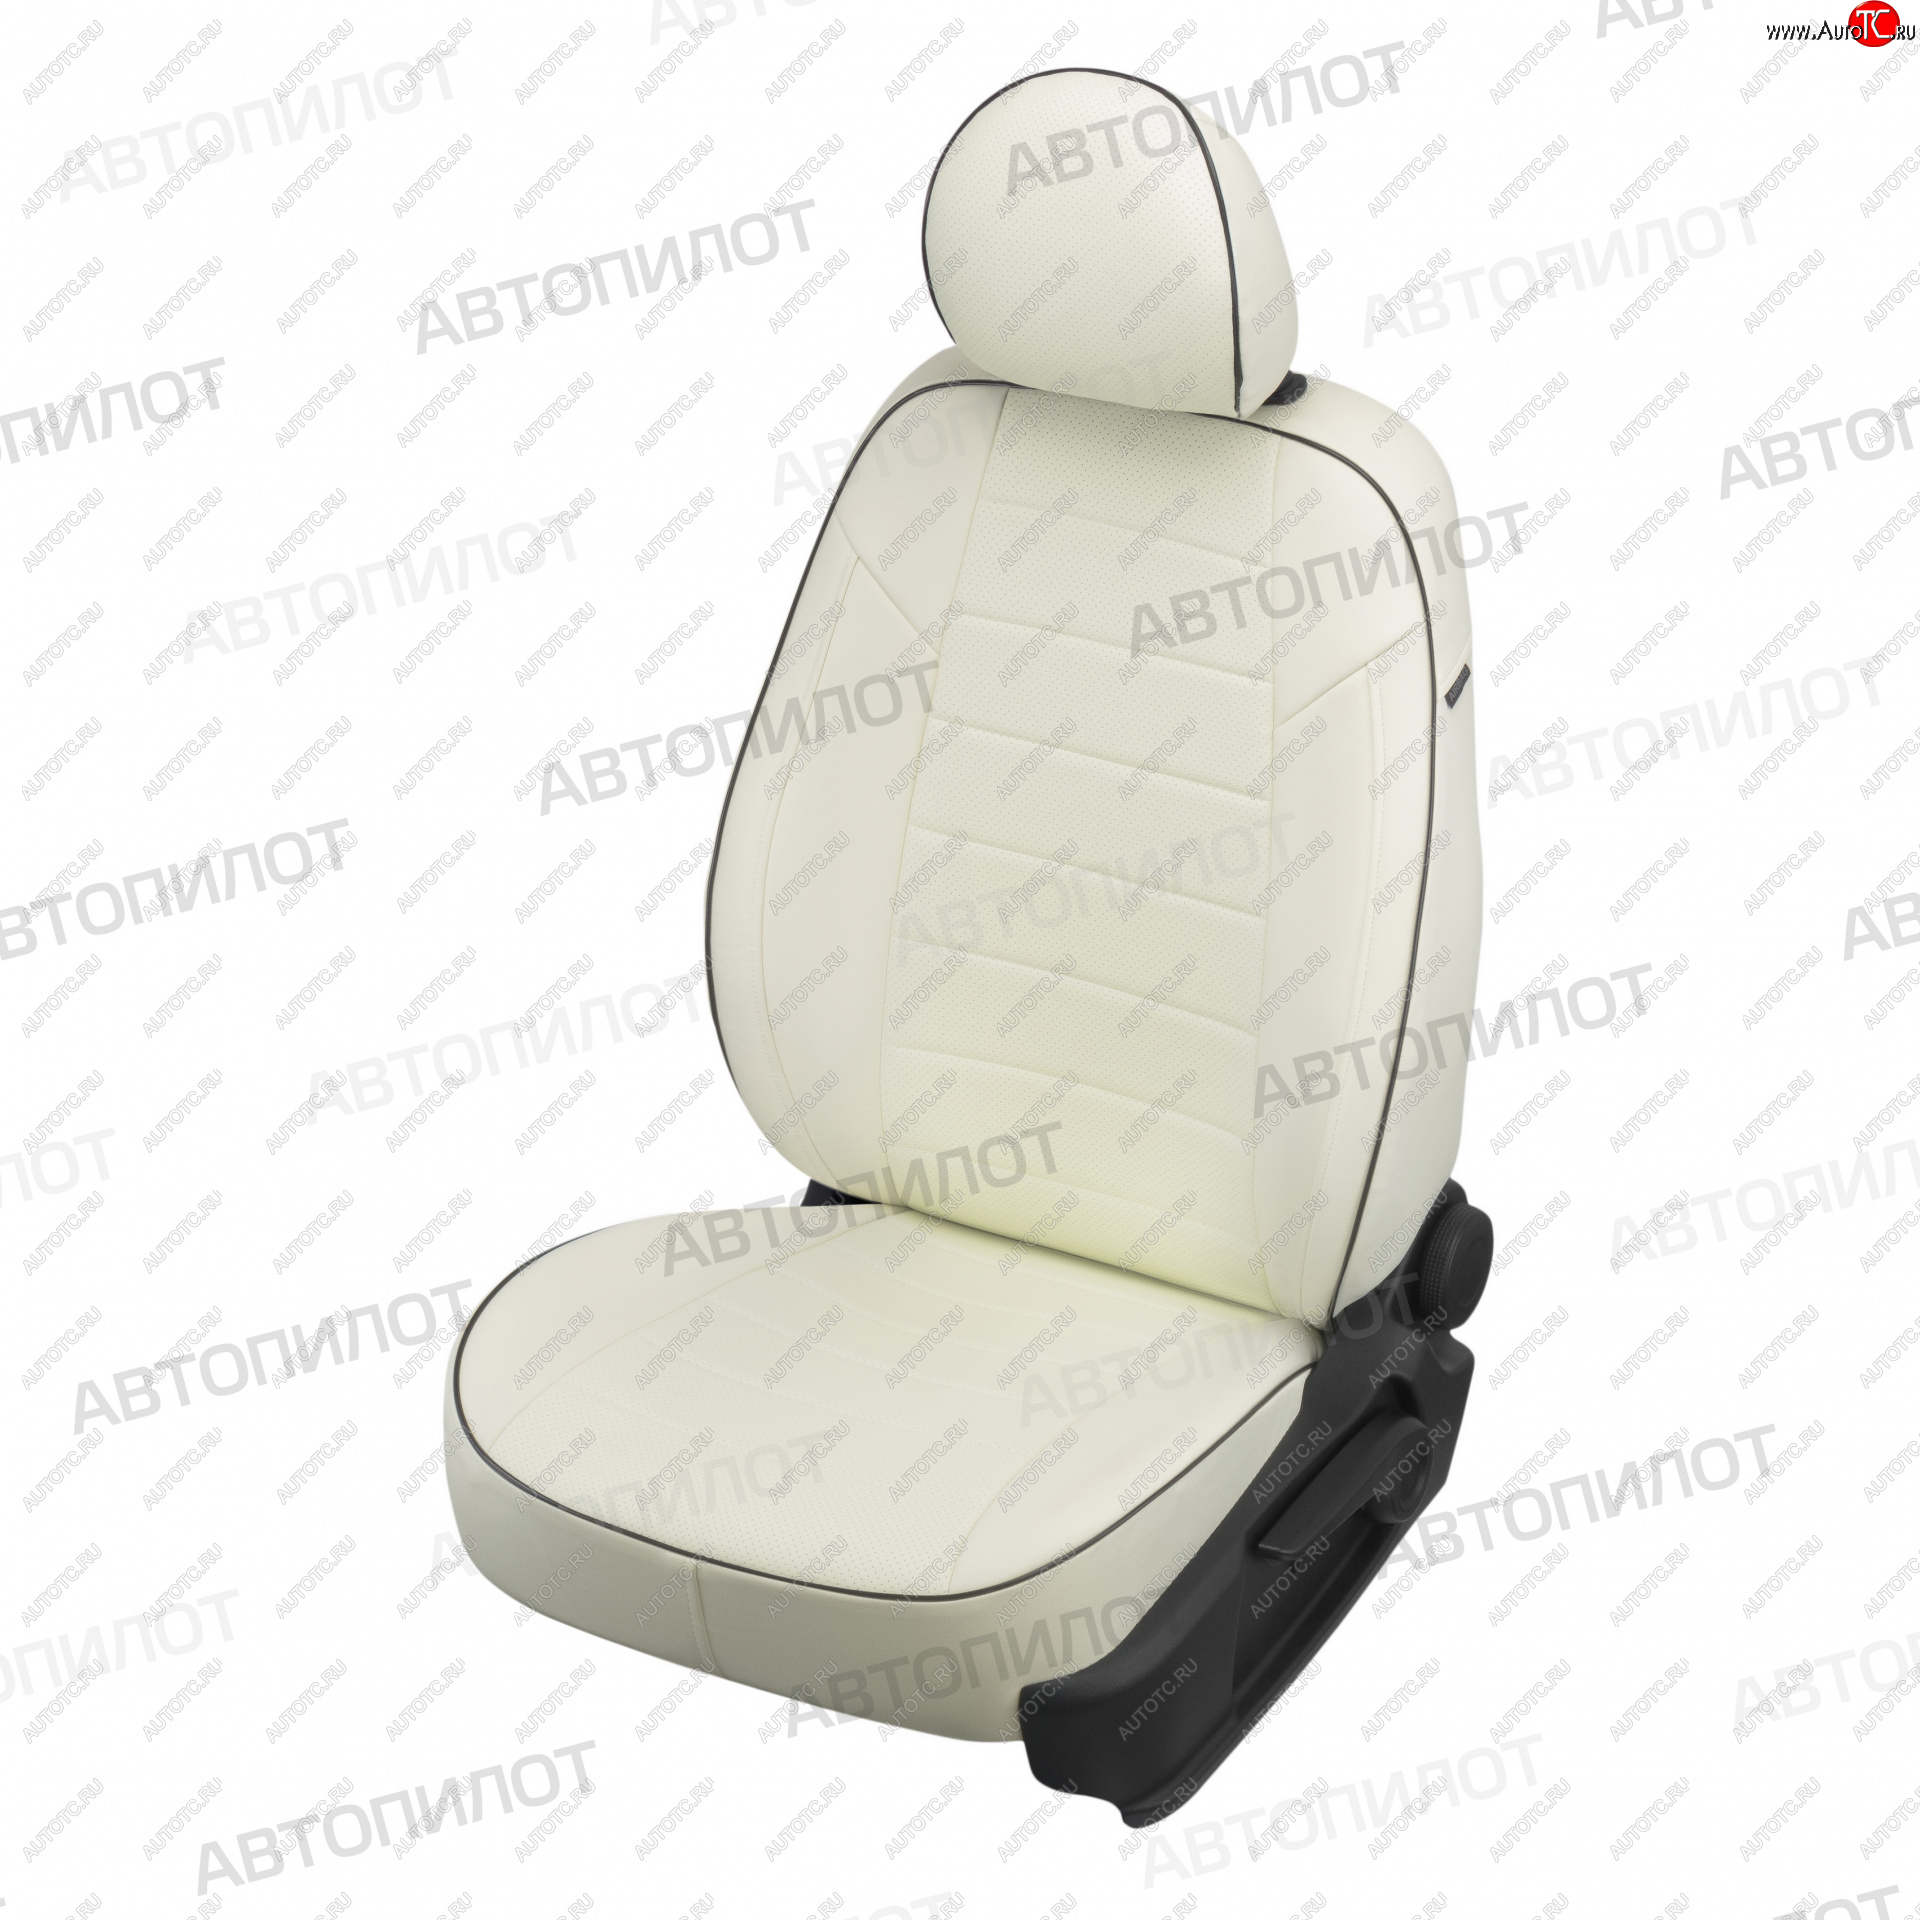 13 449 р. Чехлы сидений (экокожа) Автопилот Hyundai Sonata EF рестайлинг ТагАЗ (2001-2013) (белый)